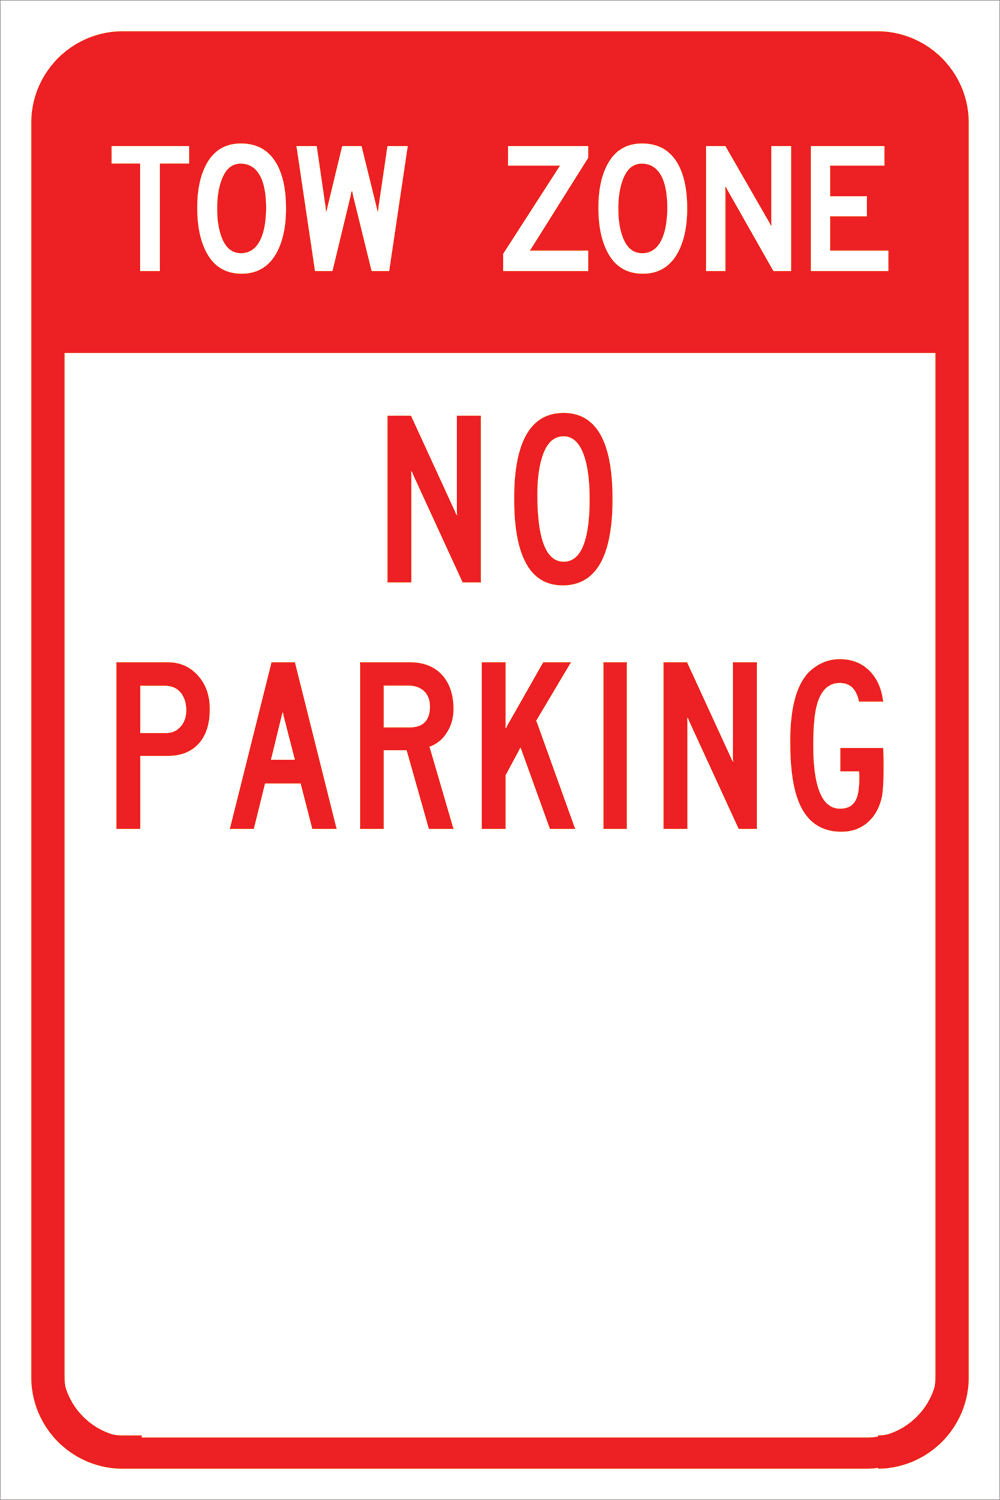 tow-zone-no-parking-12x18-qty75.jpg